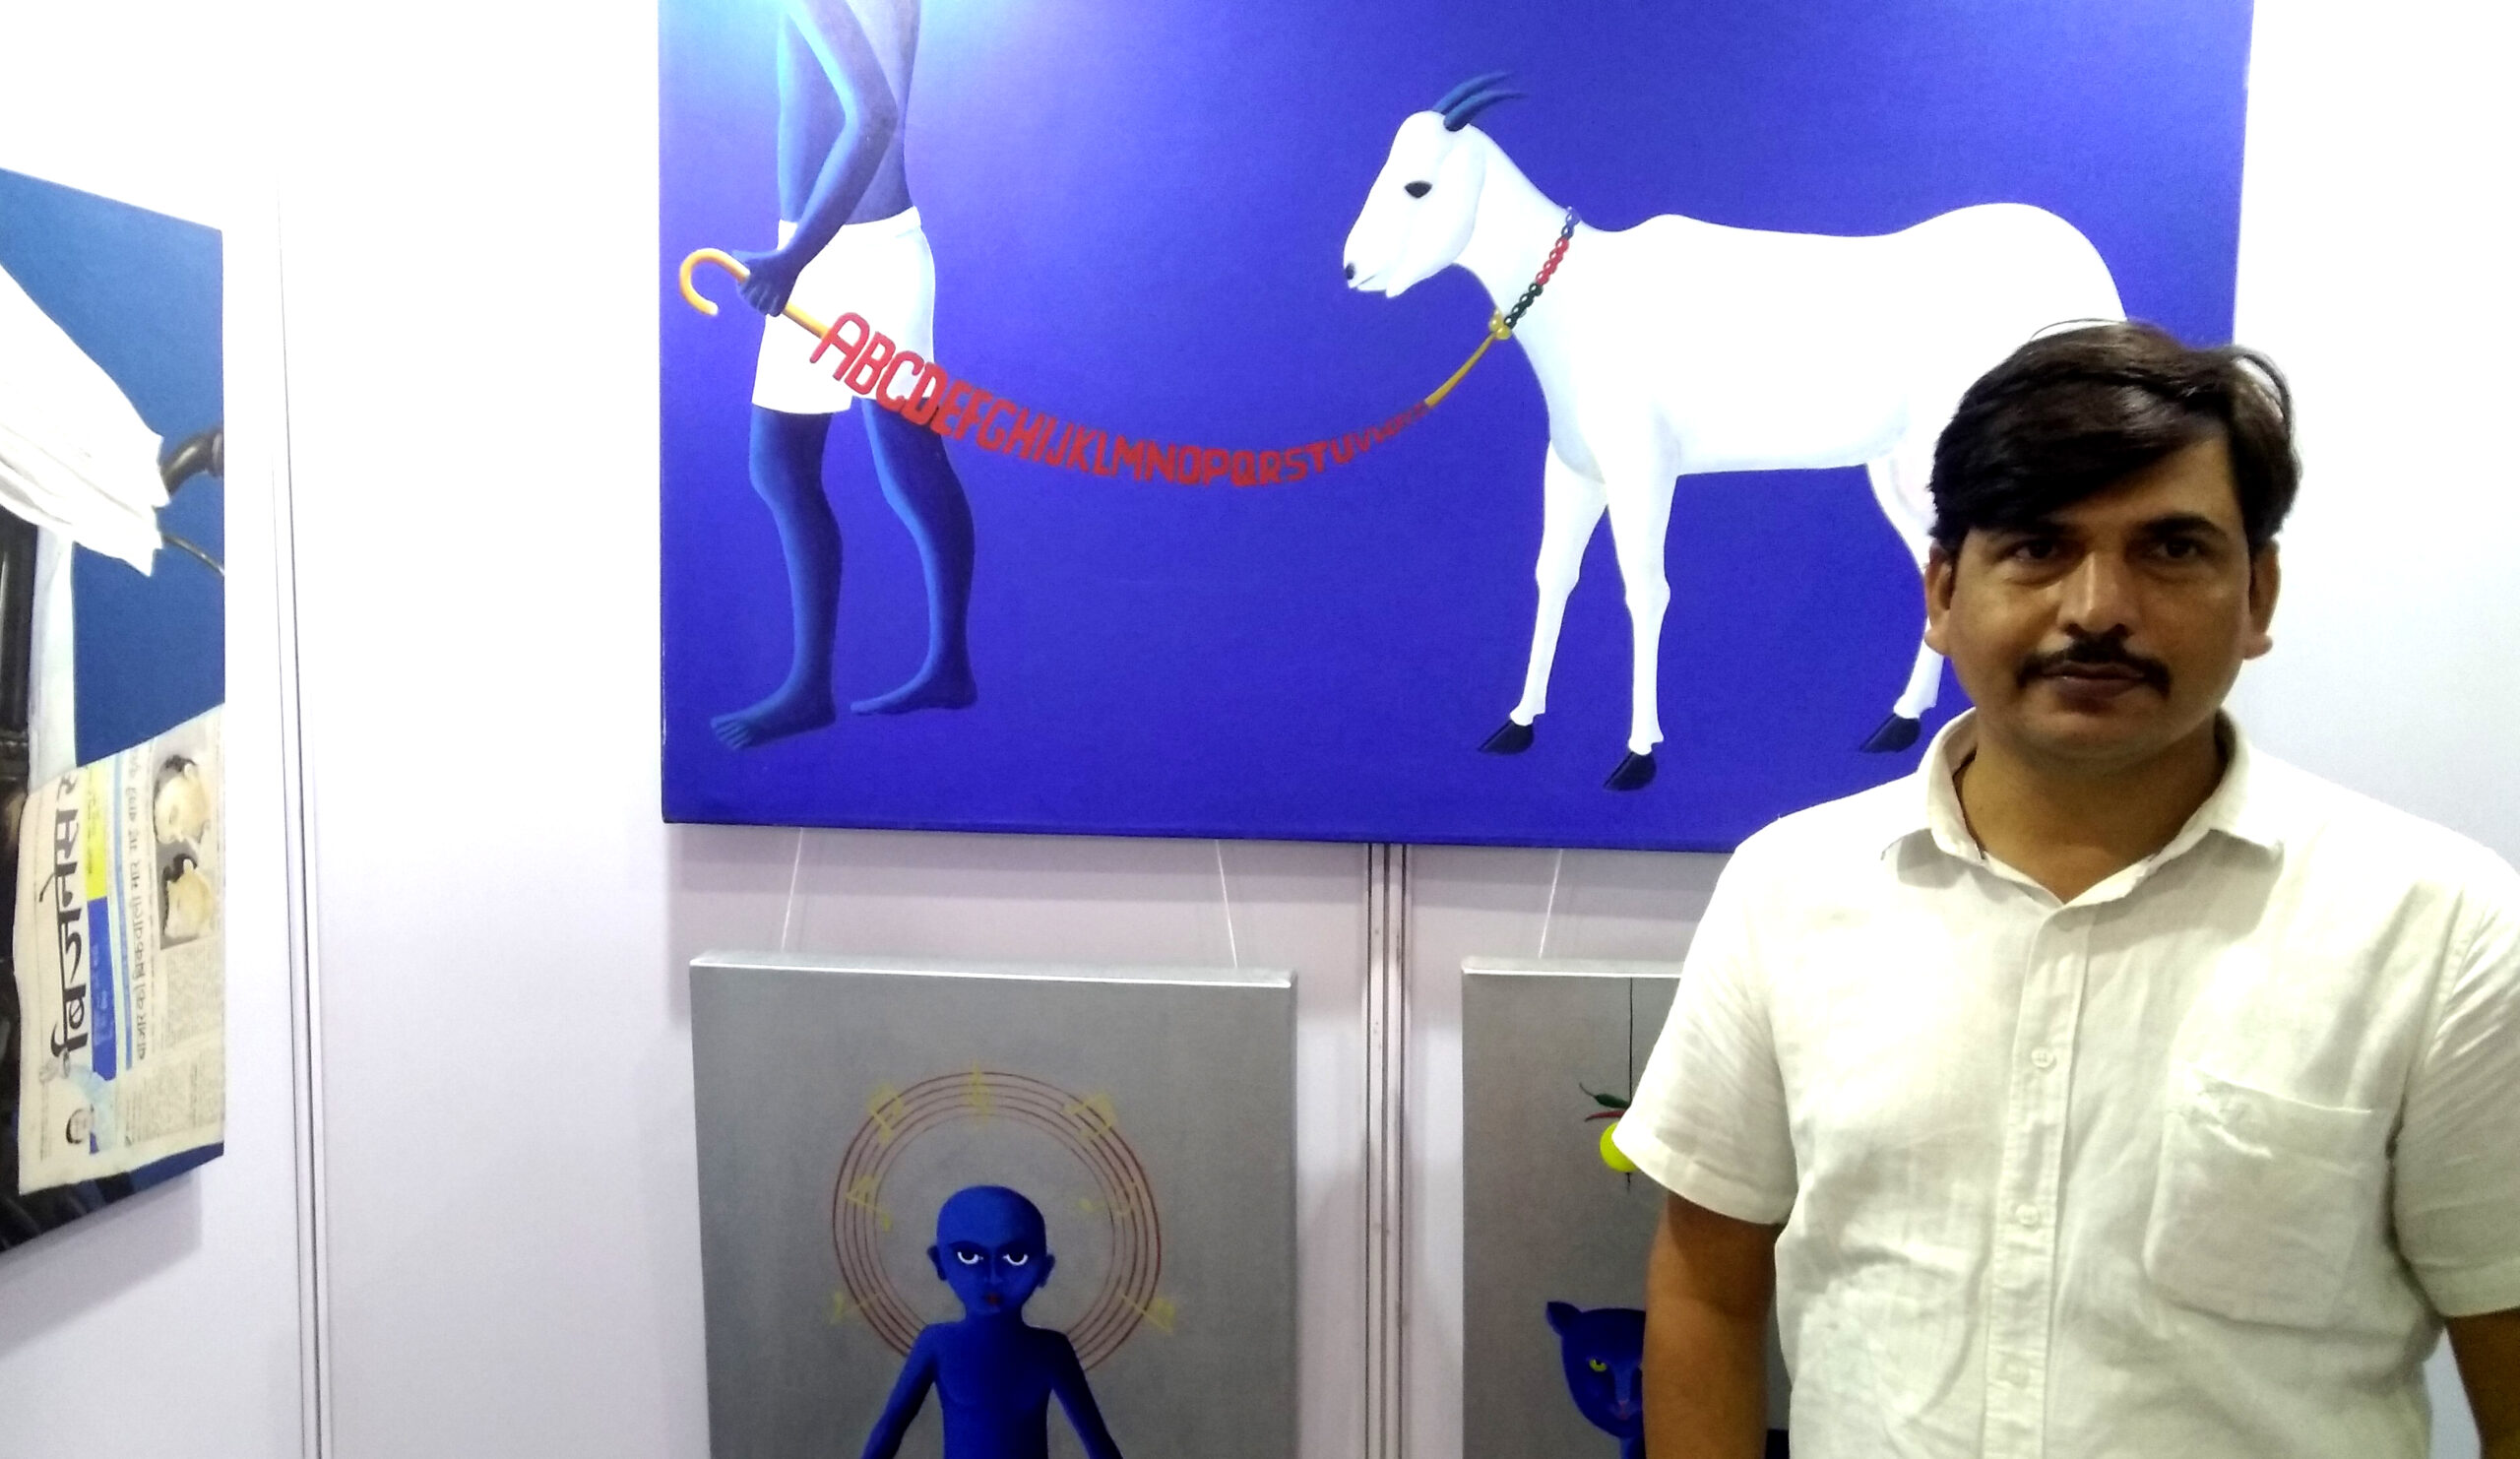 Manish Upadhyay at ARTIVAL Art Event (23rd-25th NOVEMBER, 2018), World Trade Centre, Mumbai: